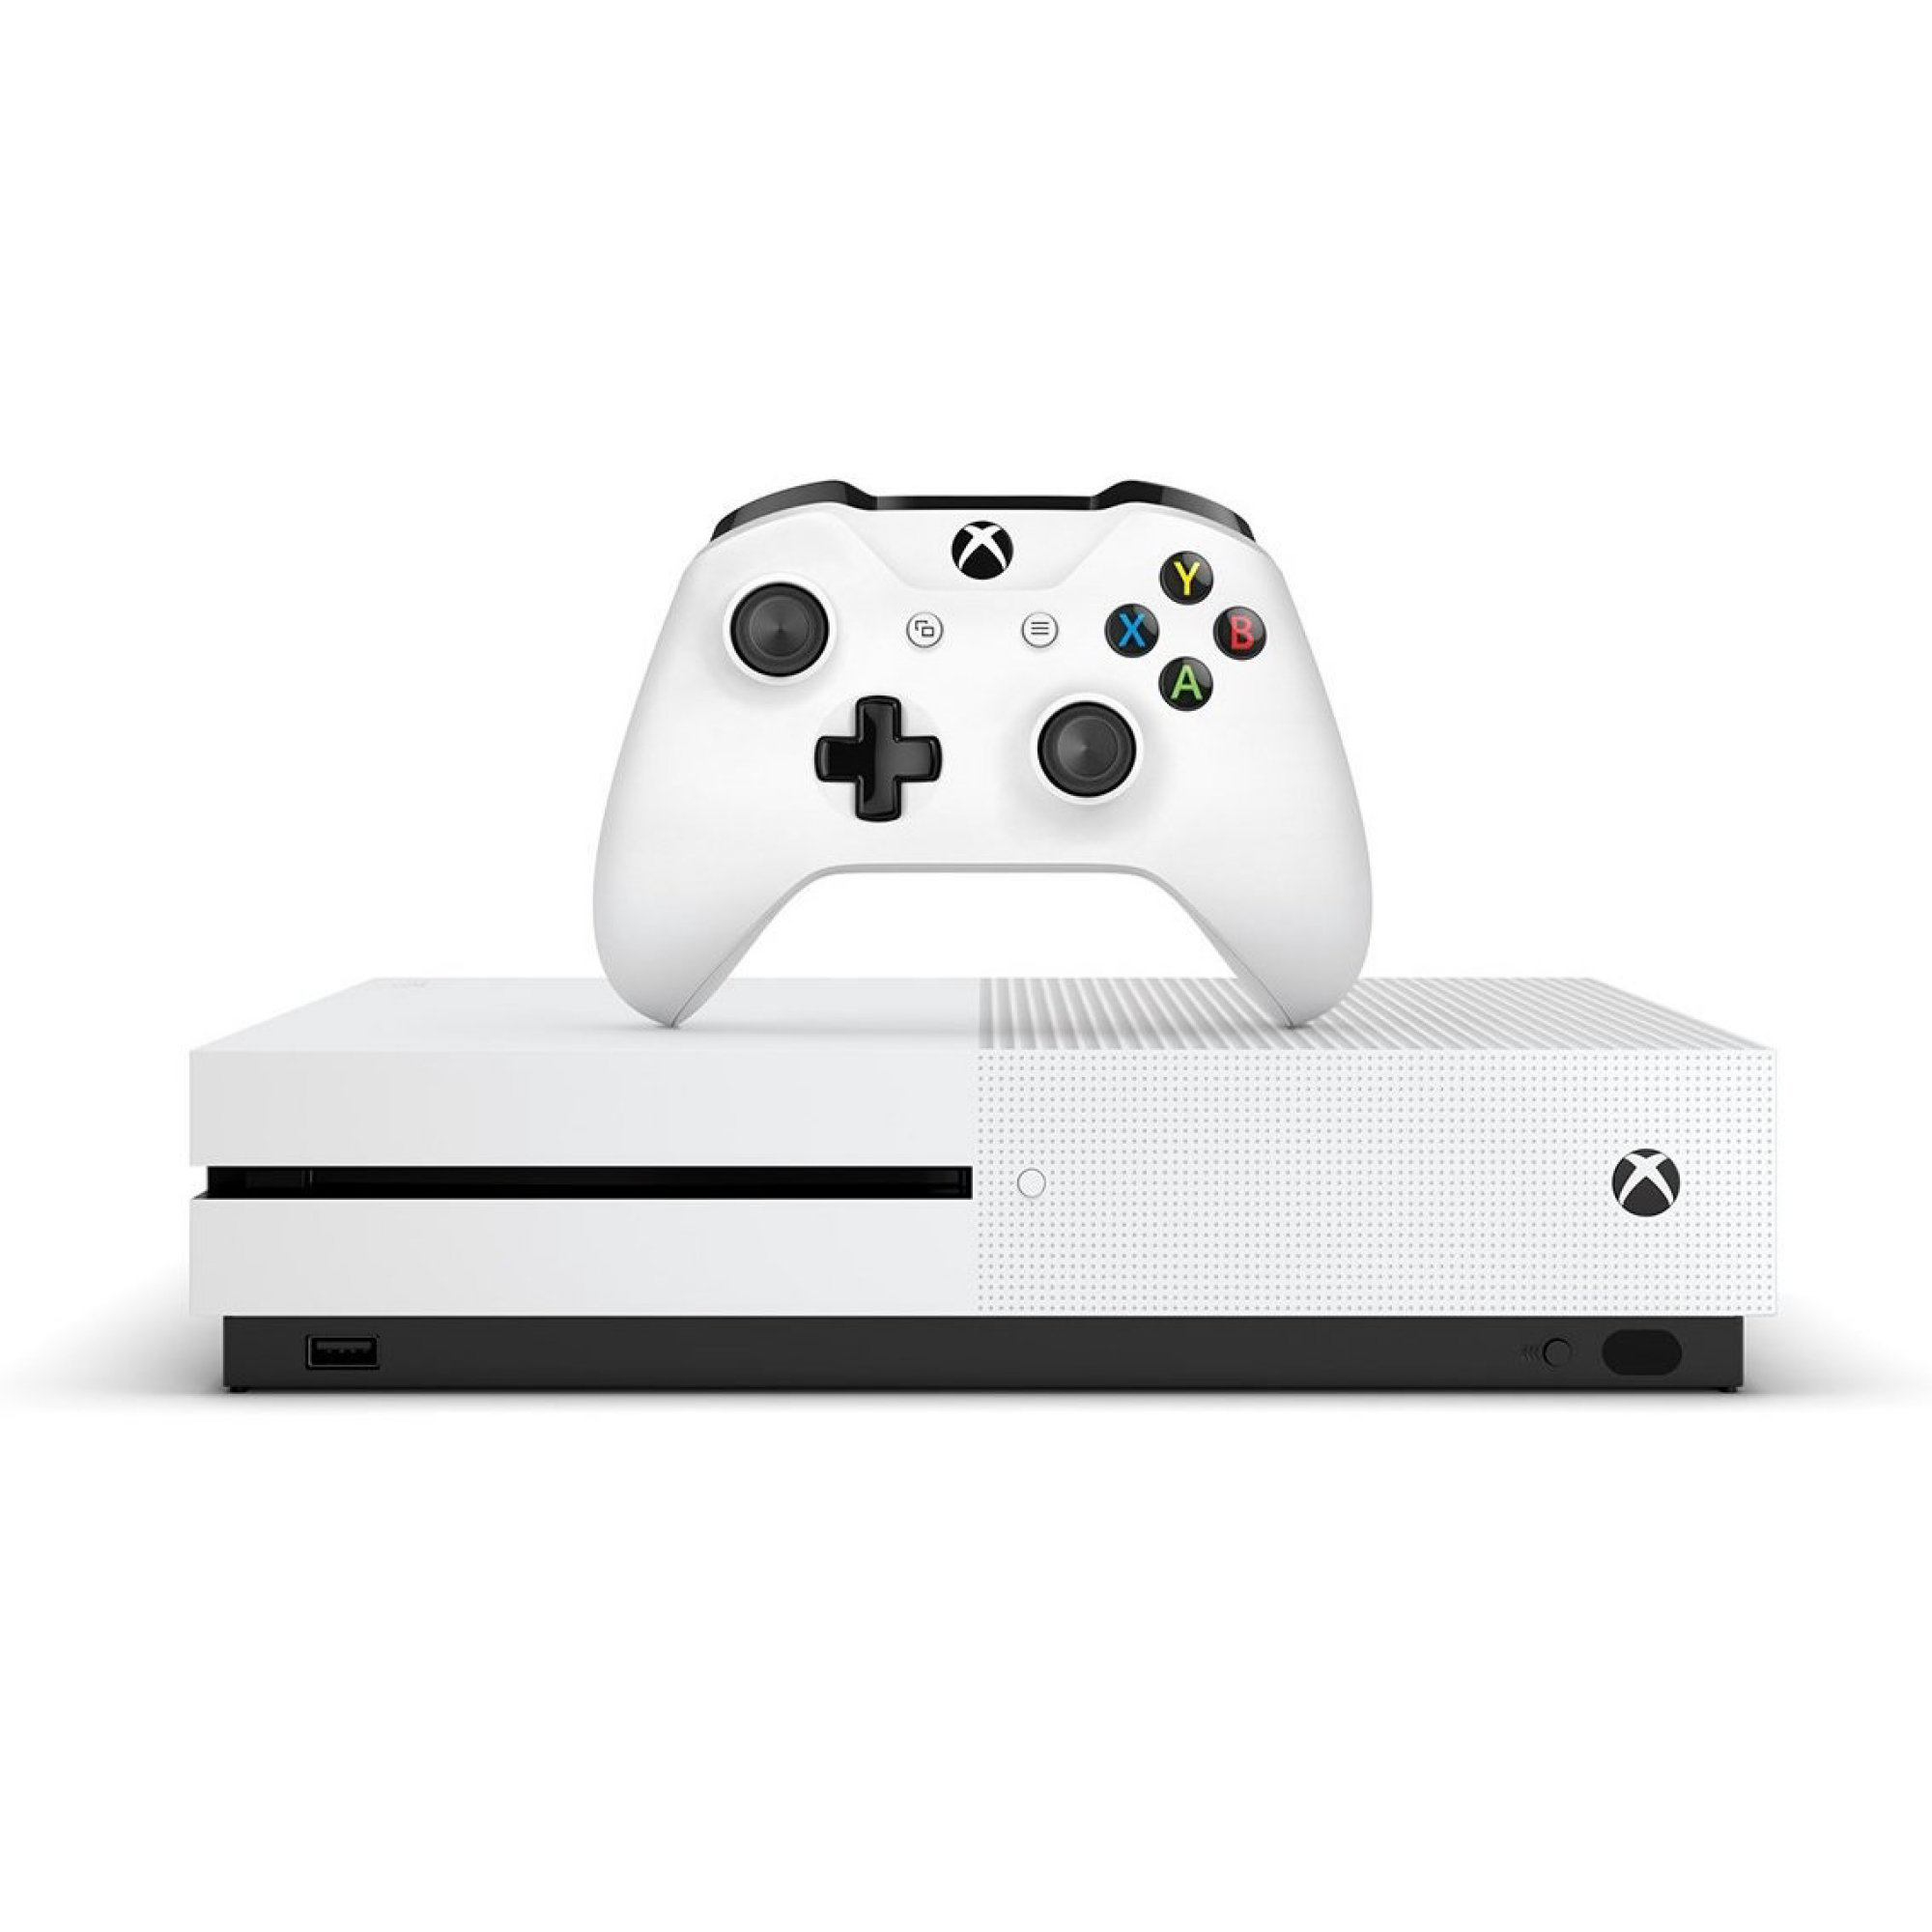 Картинка Игровая консоль Xbox One S 500 Гб Forza Horizon 3 + DLC